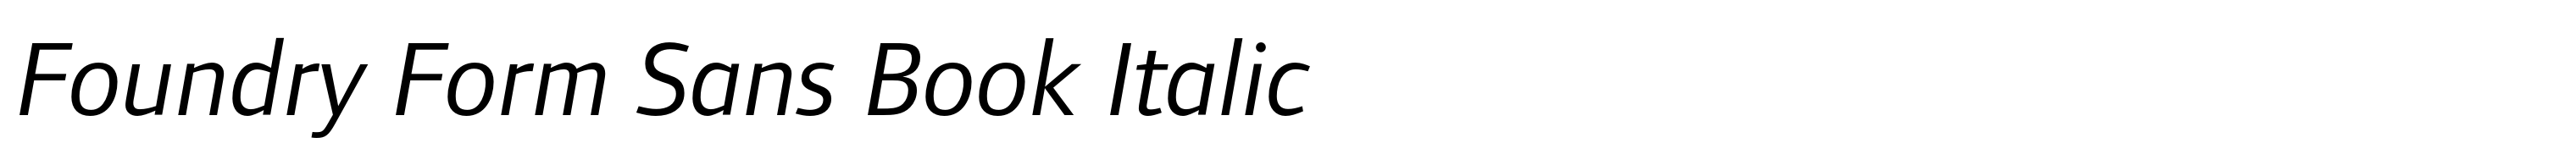 Foundry Form Sans Book Italic